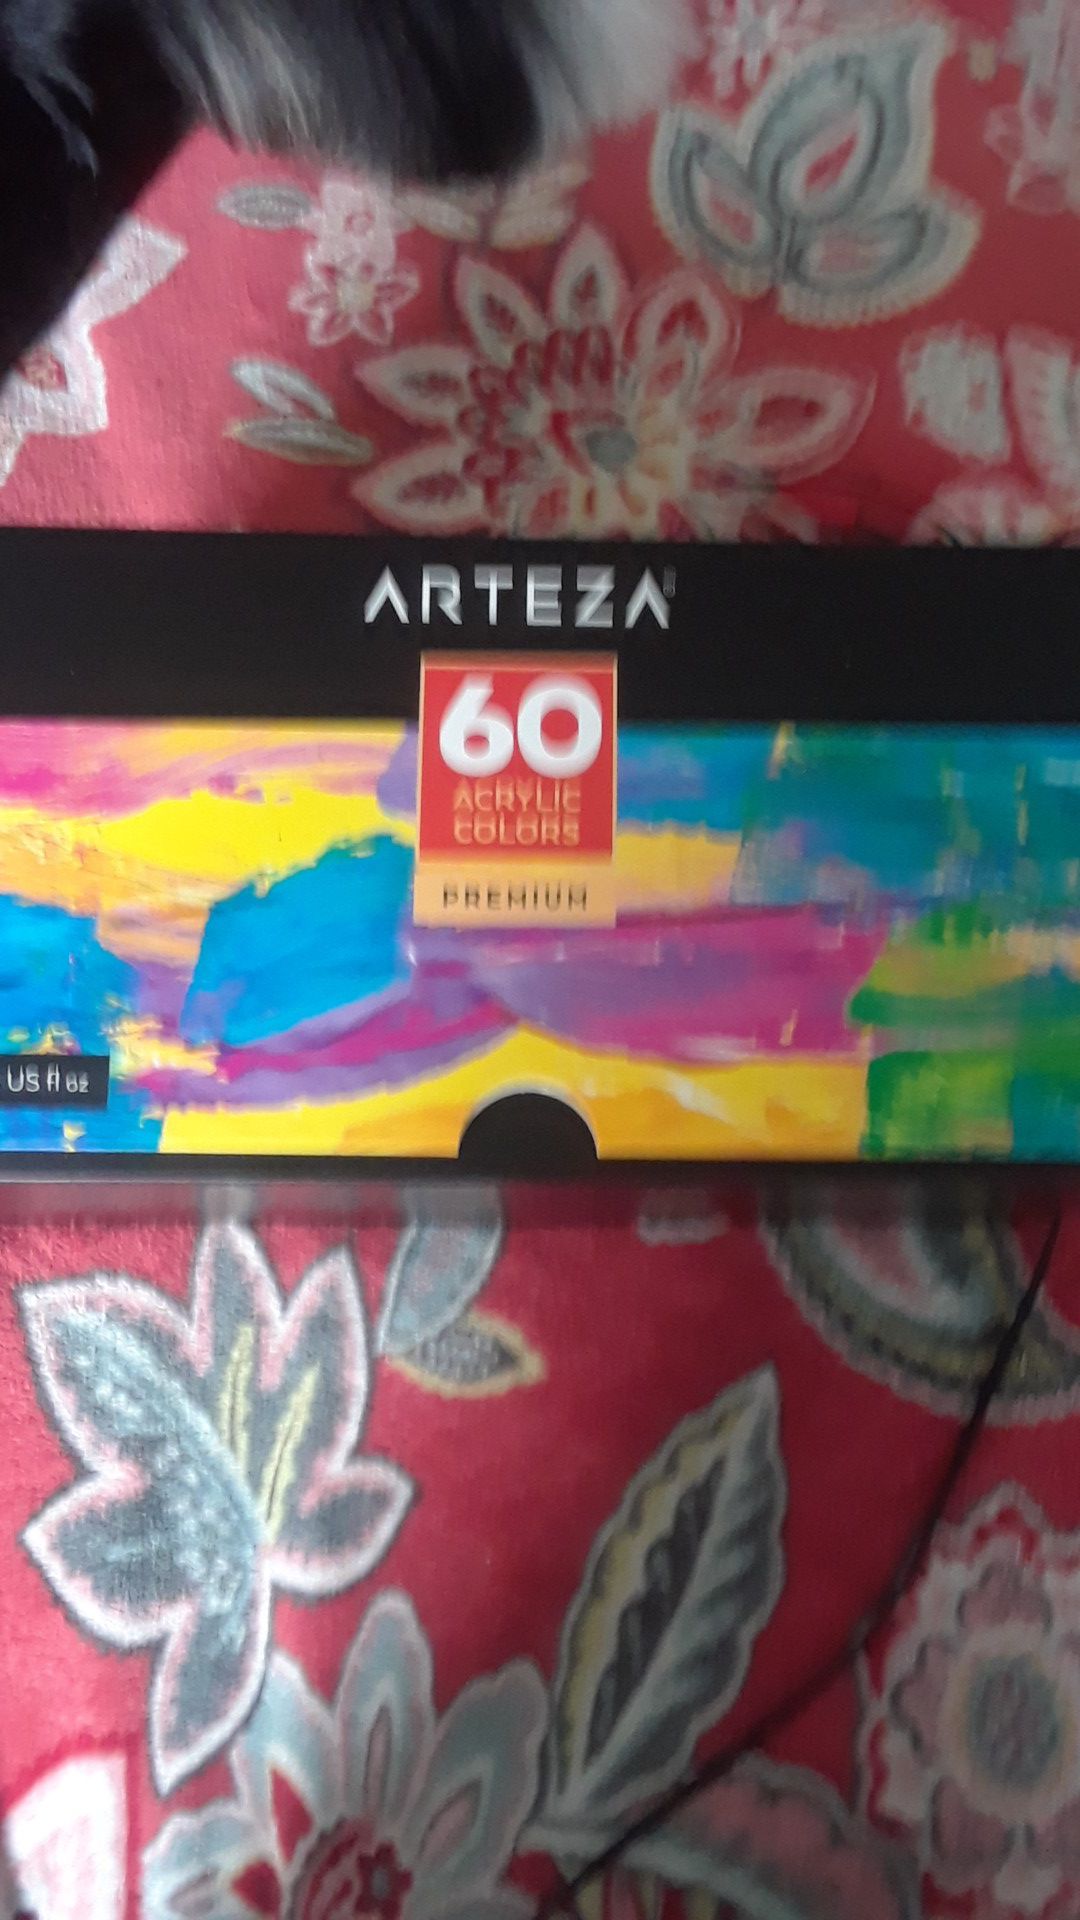 Arte za. Acrylic paints 60 colors!